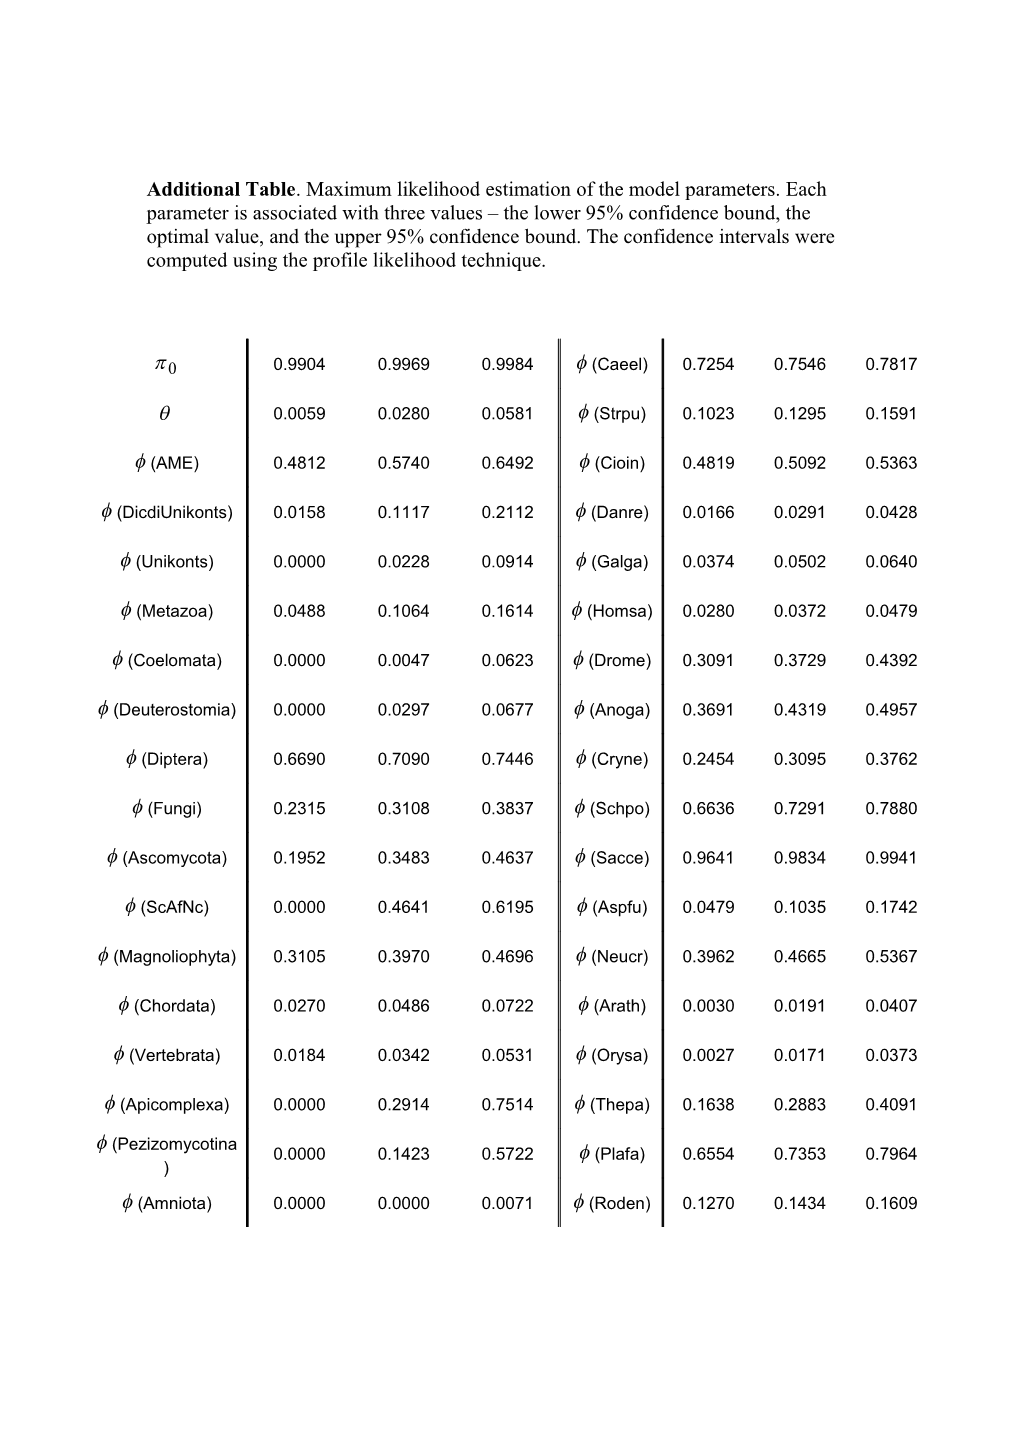 Additional Table . Maximum Likelihood Estimation of the Model Parameters. Each Parameter